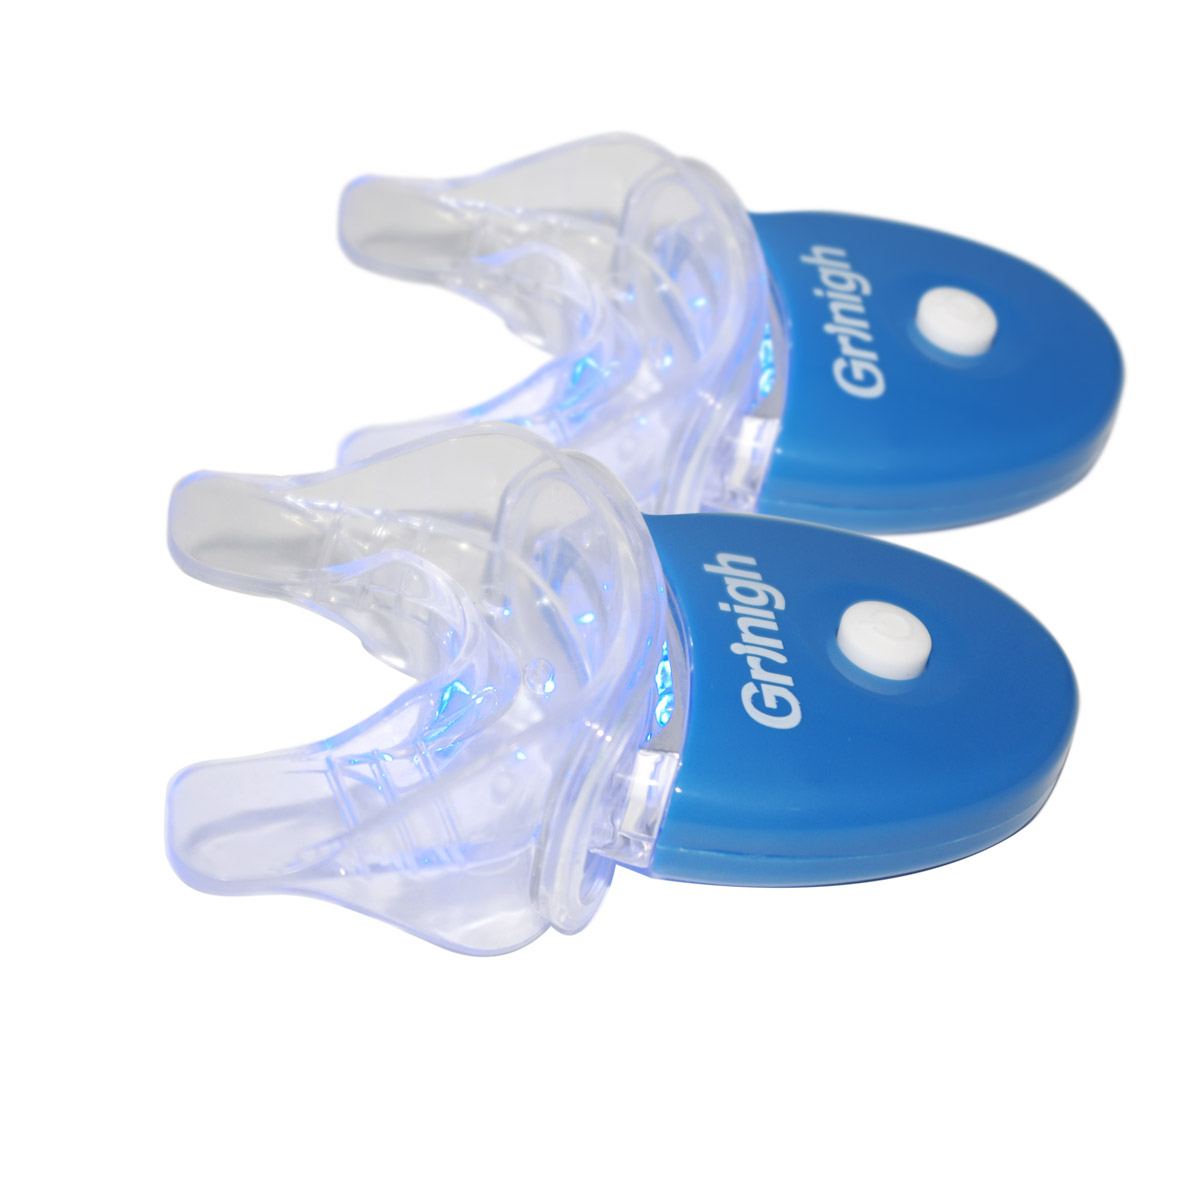 Grin365 2 Sets Mini Dental LED Wit Licht en Matched bitje voor thuis Teeth Whitening System CE goedgekeurd